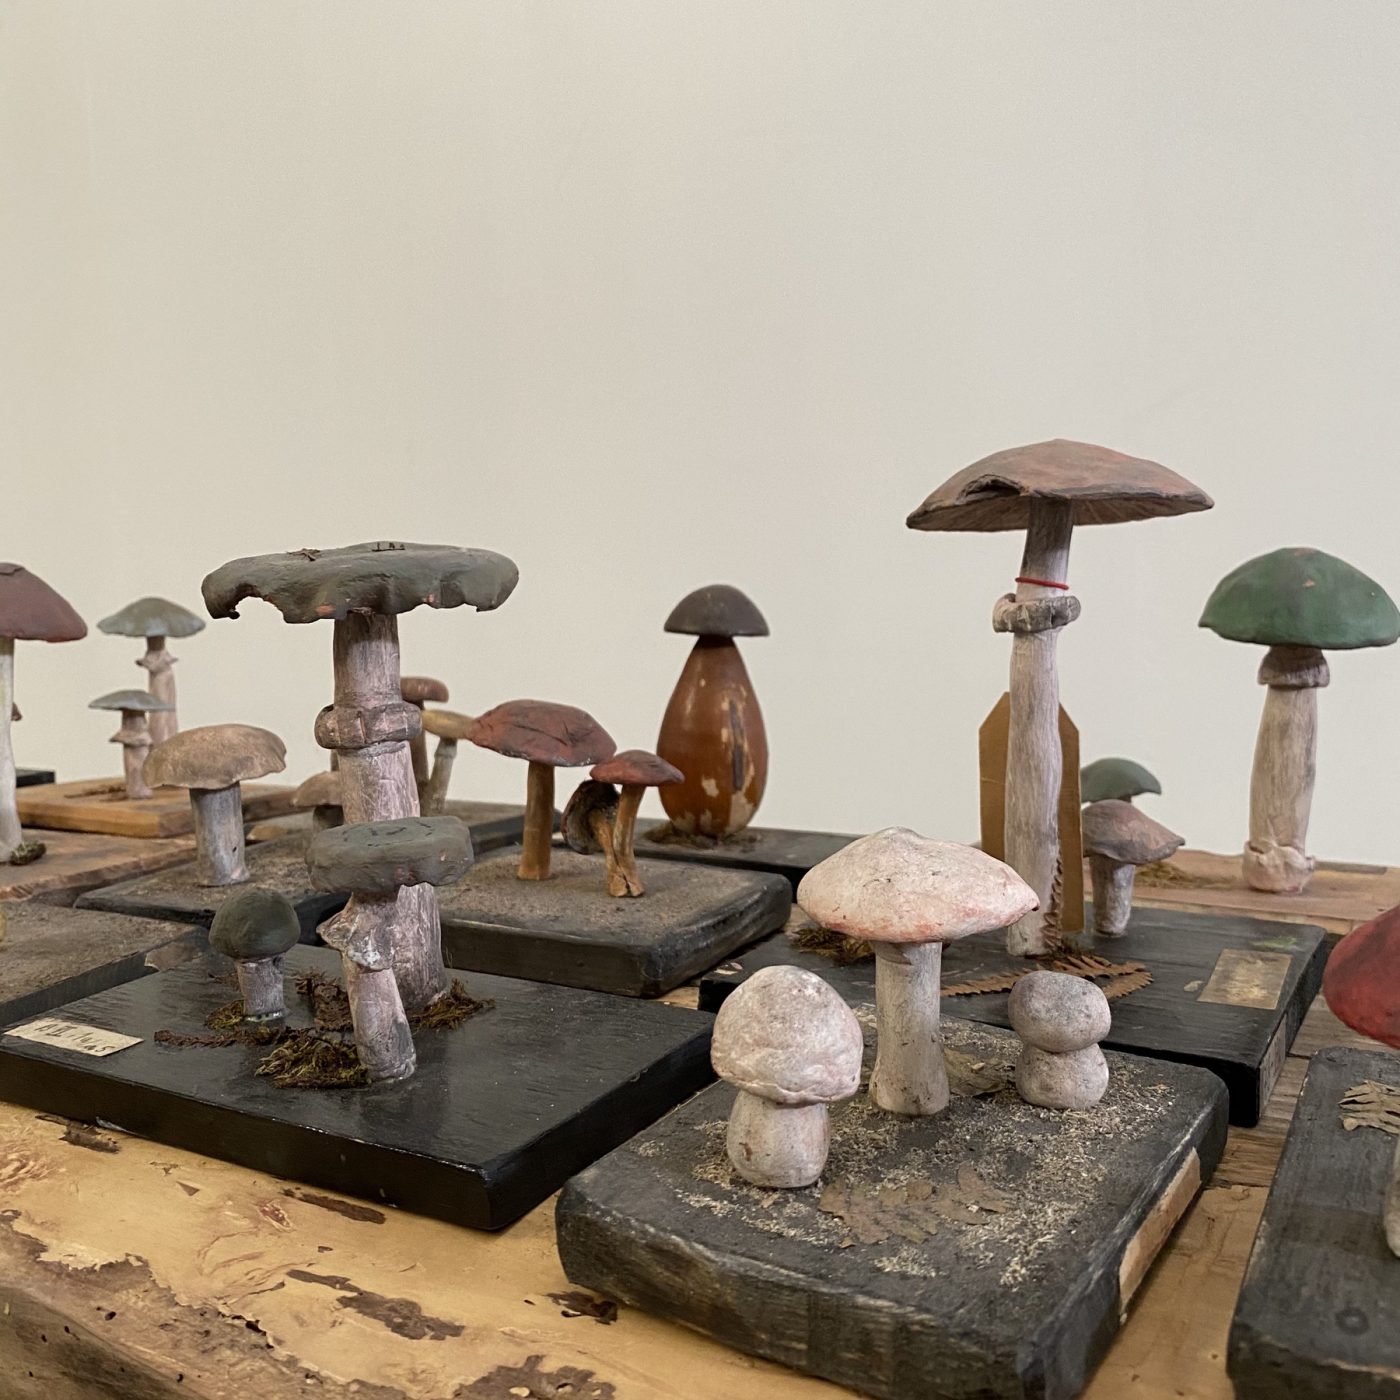 objet-vagabond-mushrooms-collection0012